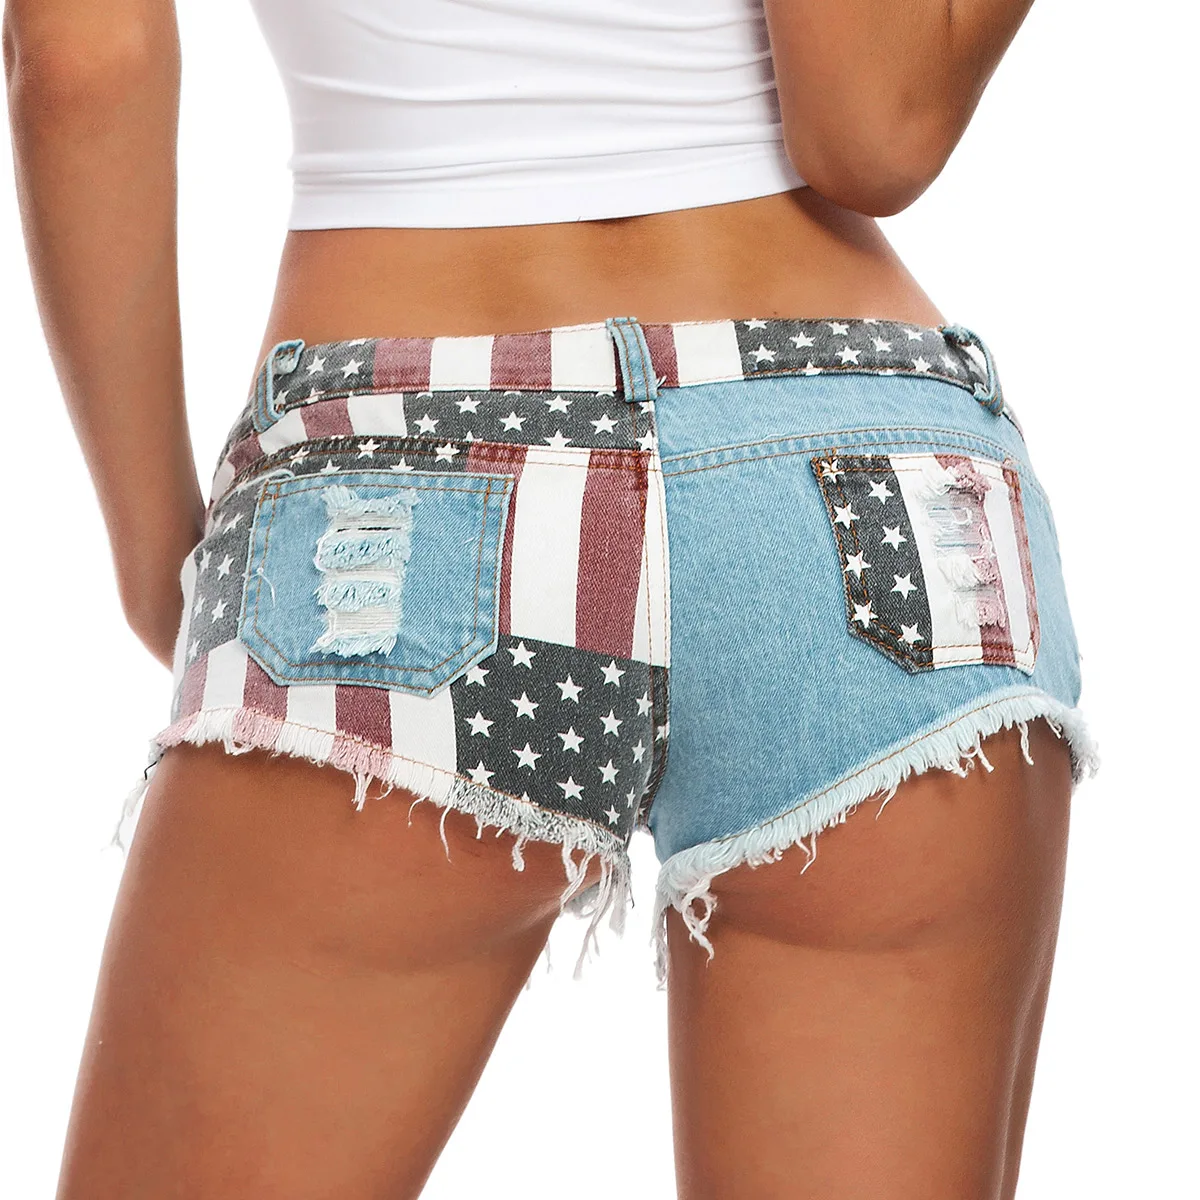 

Nightclub Beach Mini Tassels Party Shorts Sexy Low Rise Jeans Shorts Women USA Flag Printed Denim Shorts Skinny Hole Hot Pants